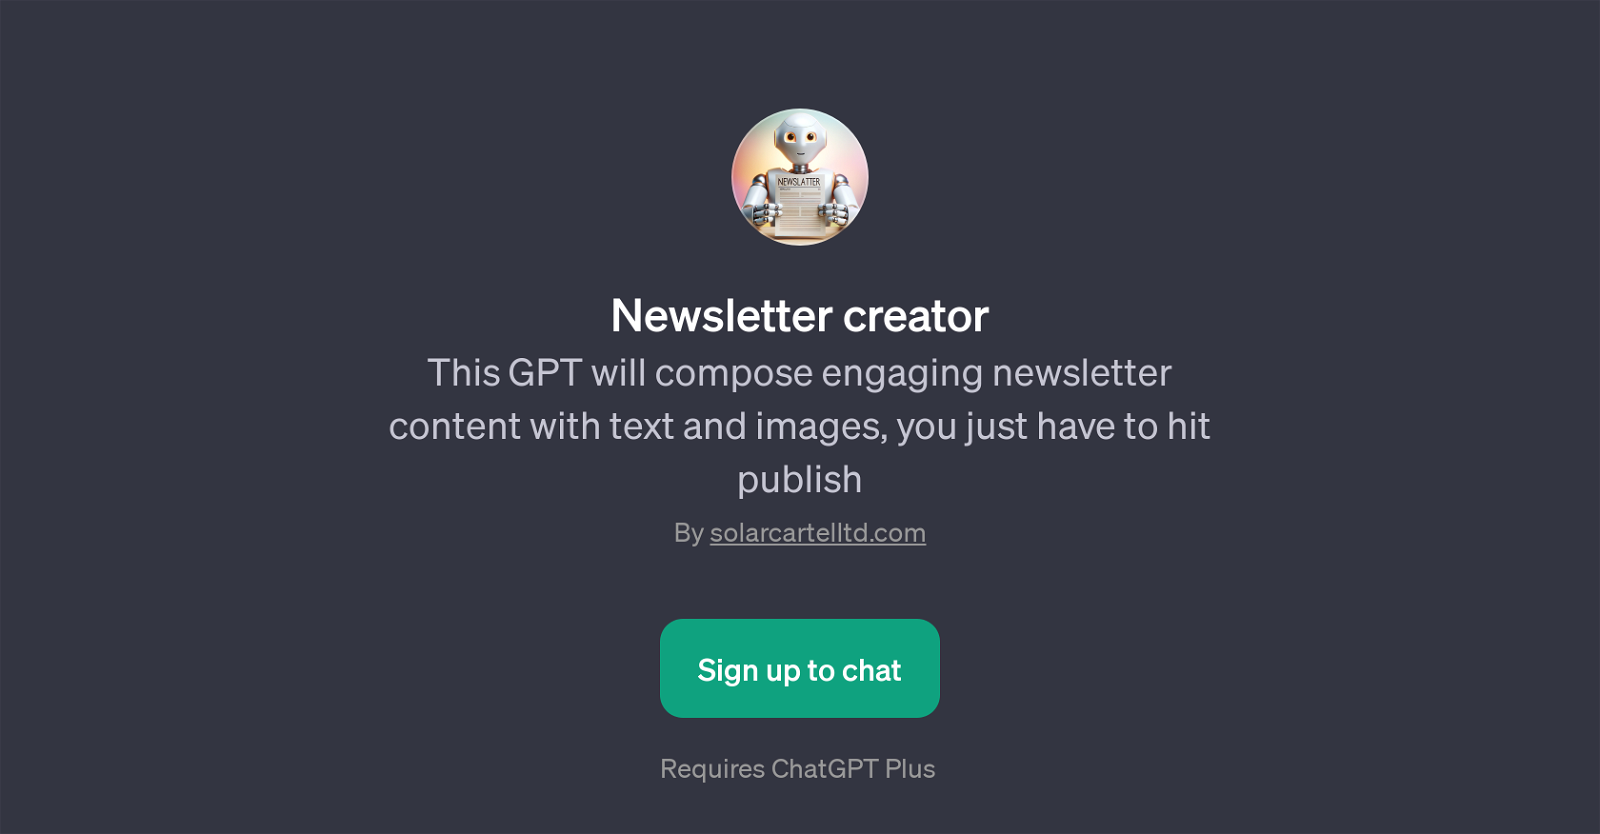 Newsletter Creator website